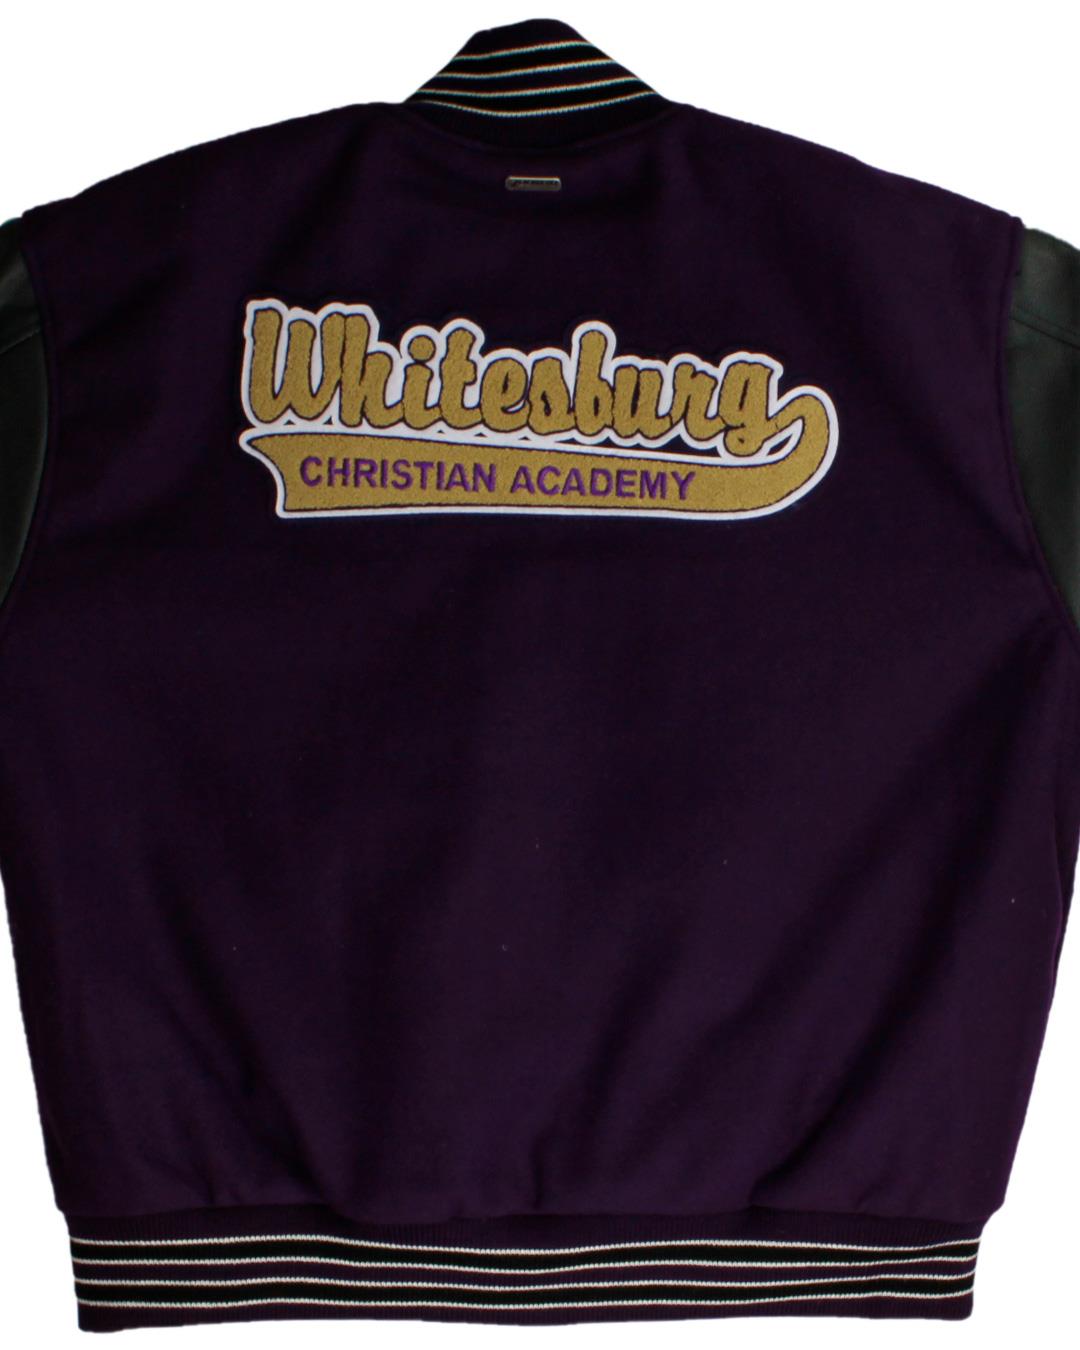 Whitesburg Christian Academy Letterman, Huntsville, Alabama - Back